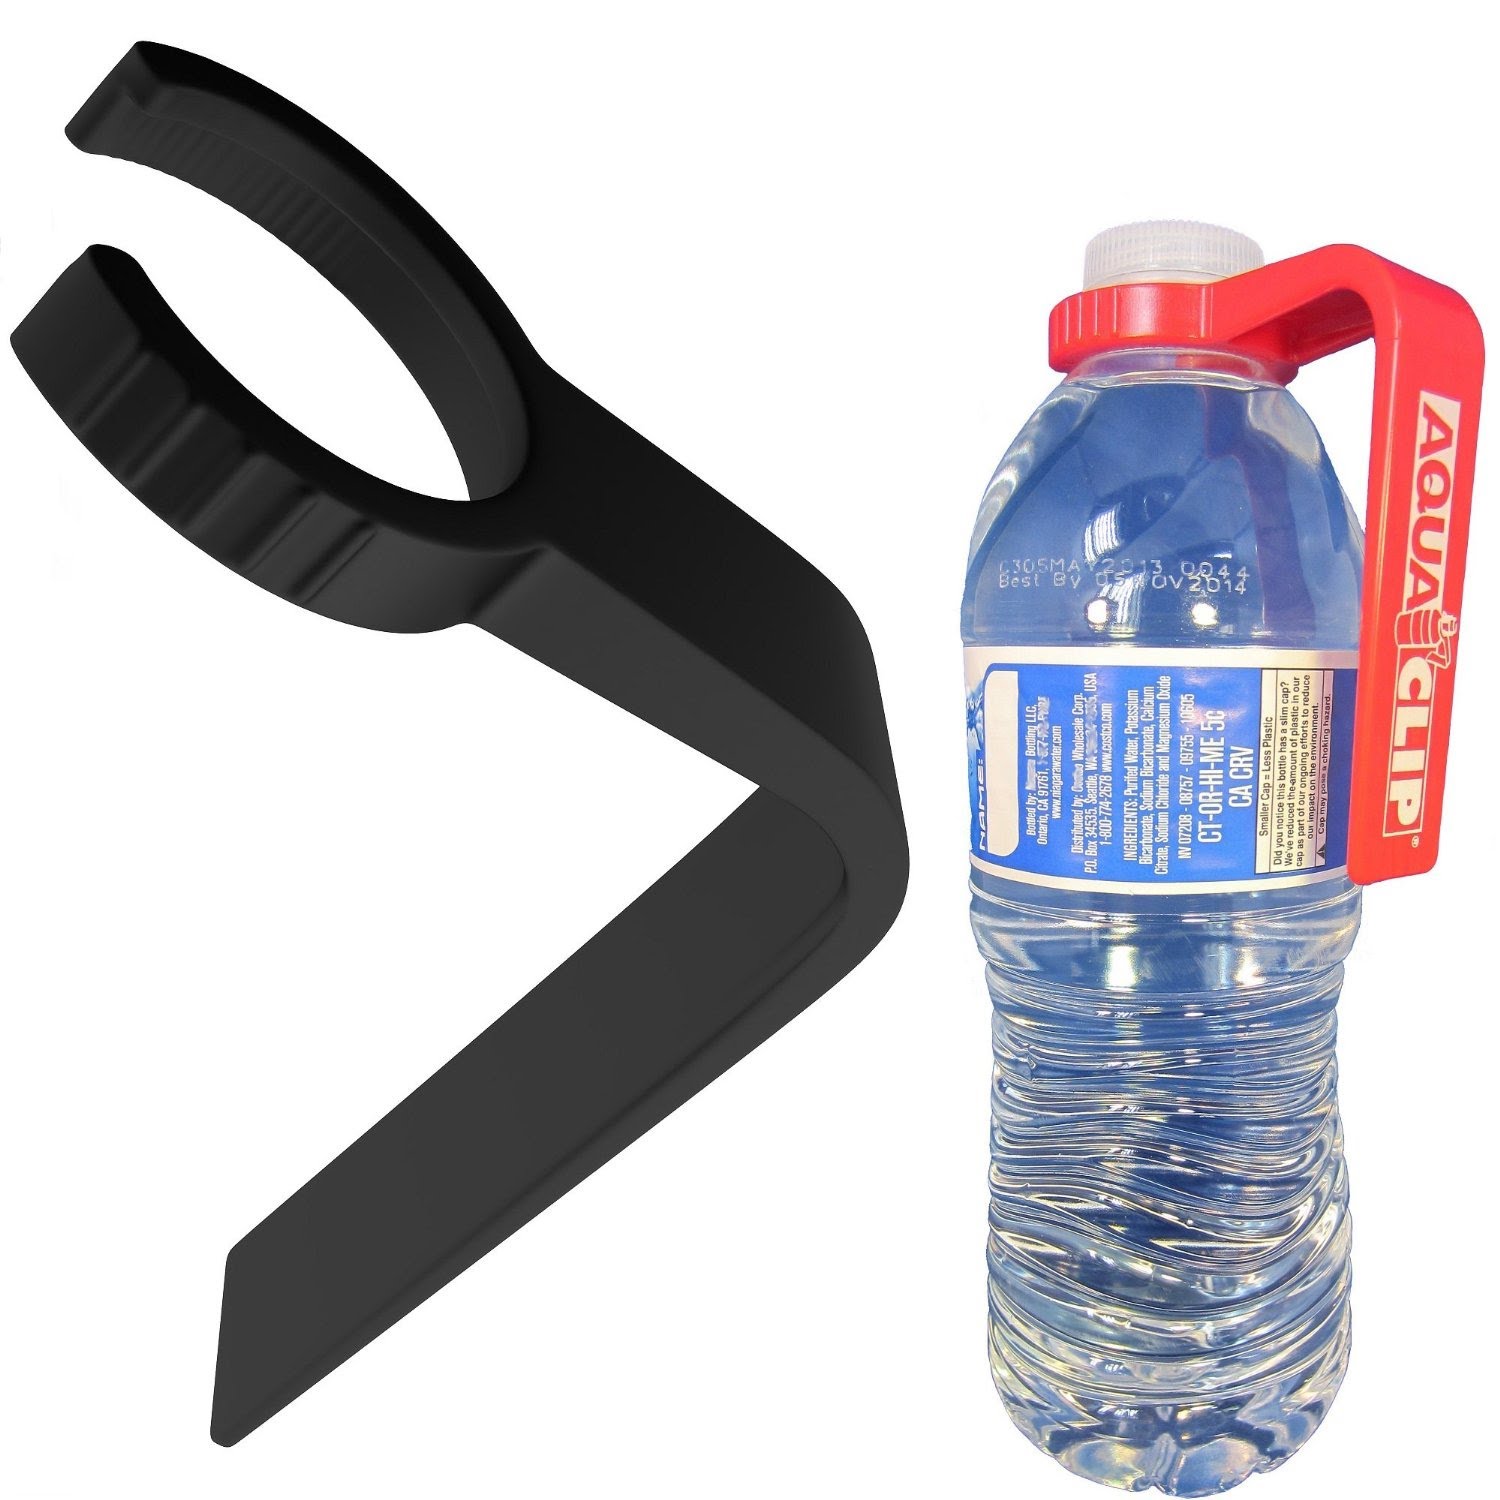 Aqua Clip Water Bottle Holder